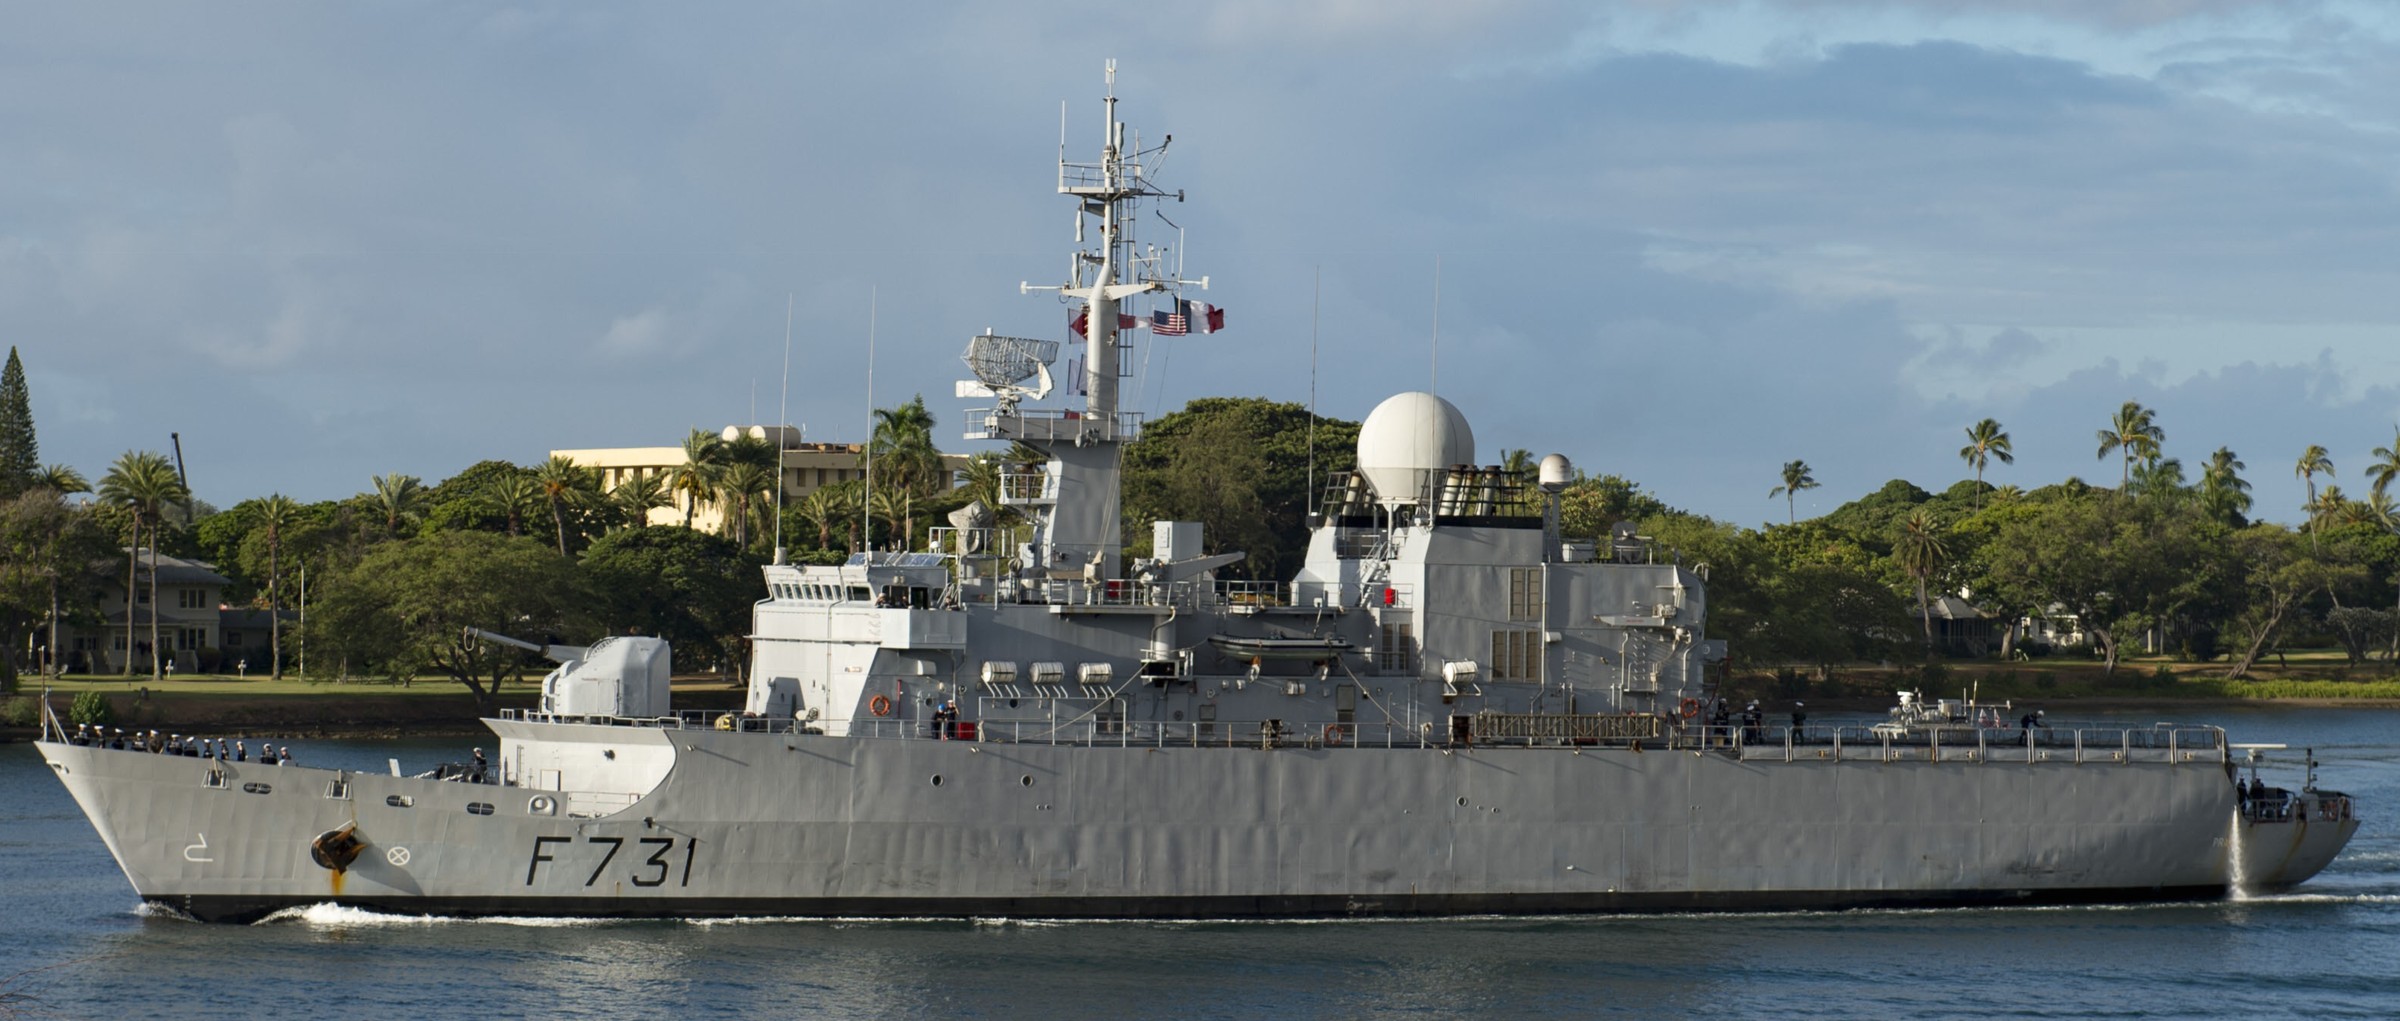 f-731 fs prairial floreal class frigate french navy marine nationale fregate surveillance 34